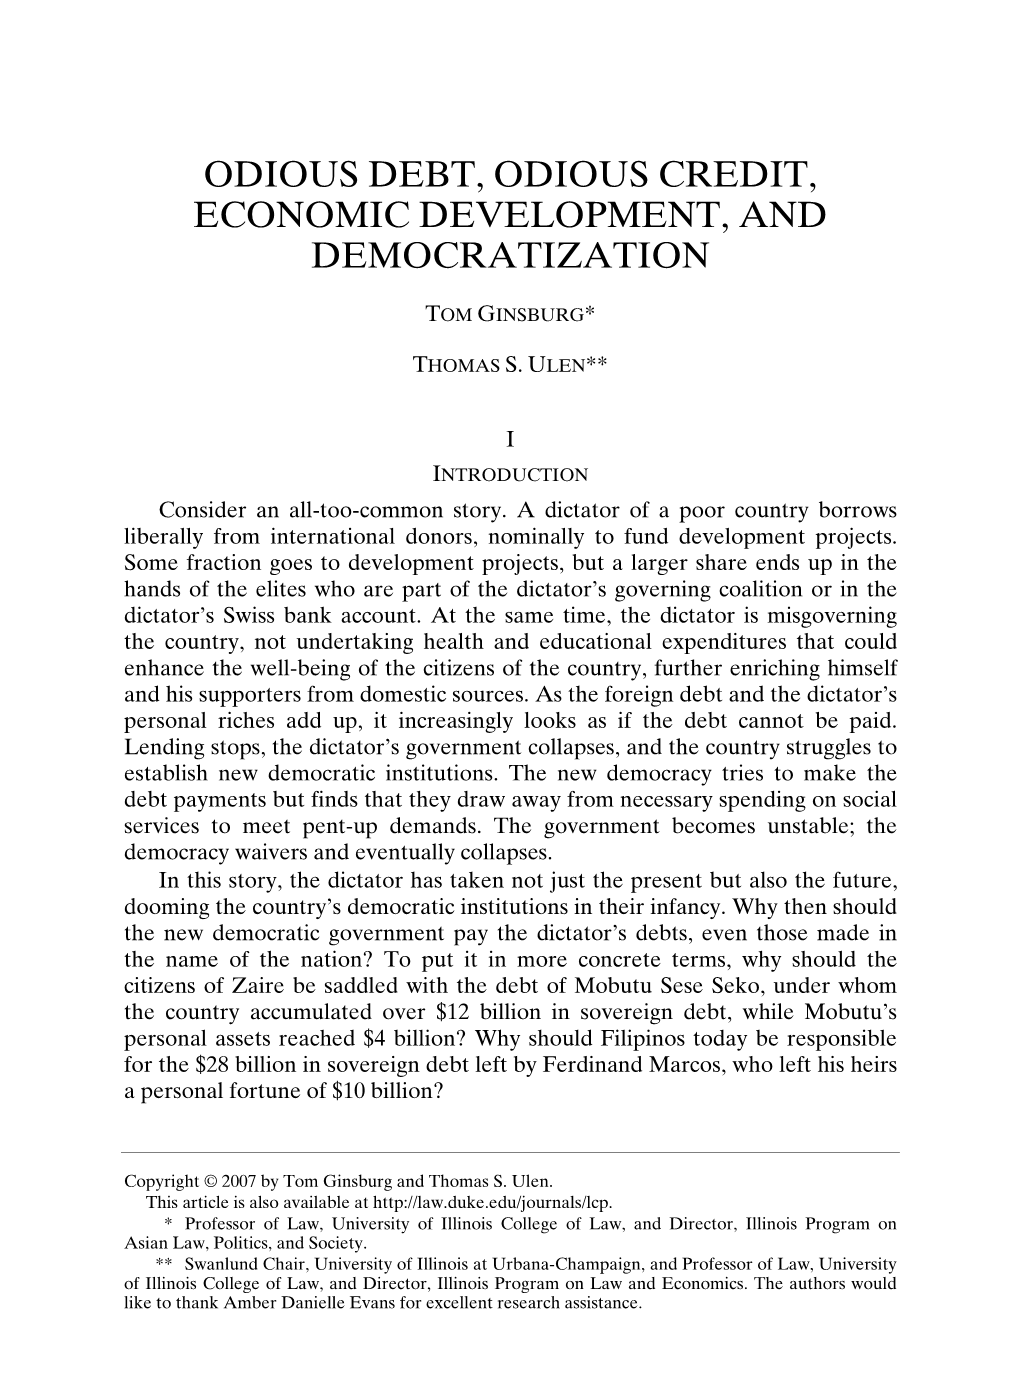 Odious Debt, Odious Credit, Economic Development, and Democratization